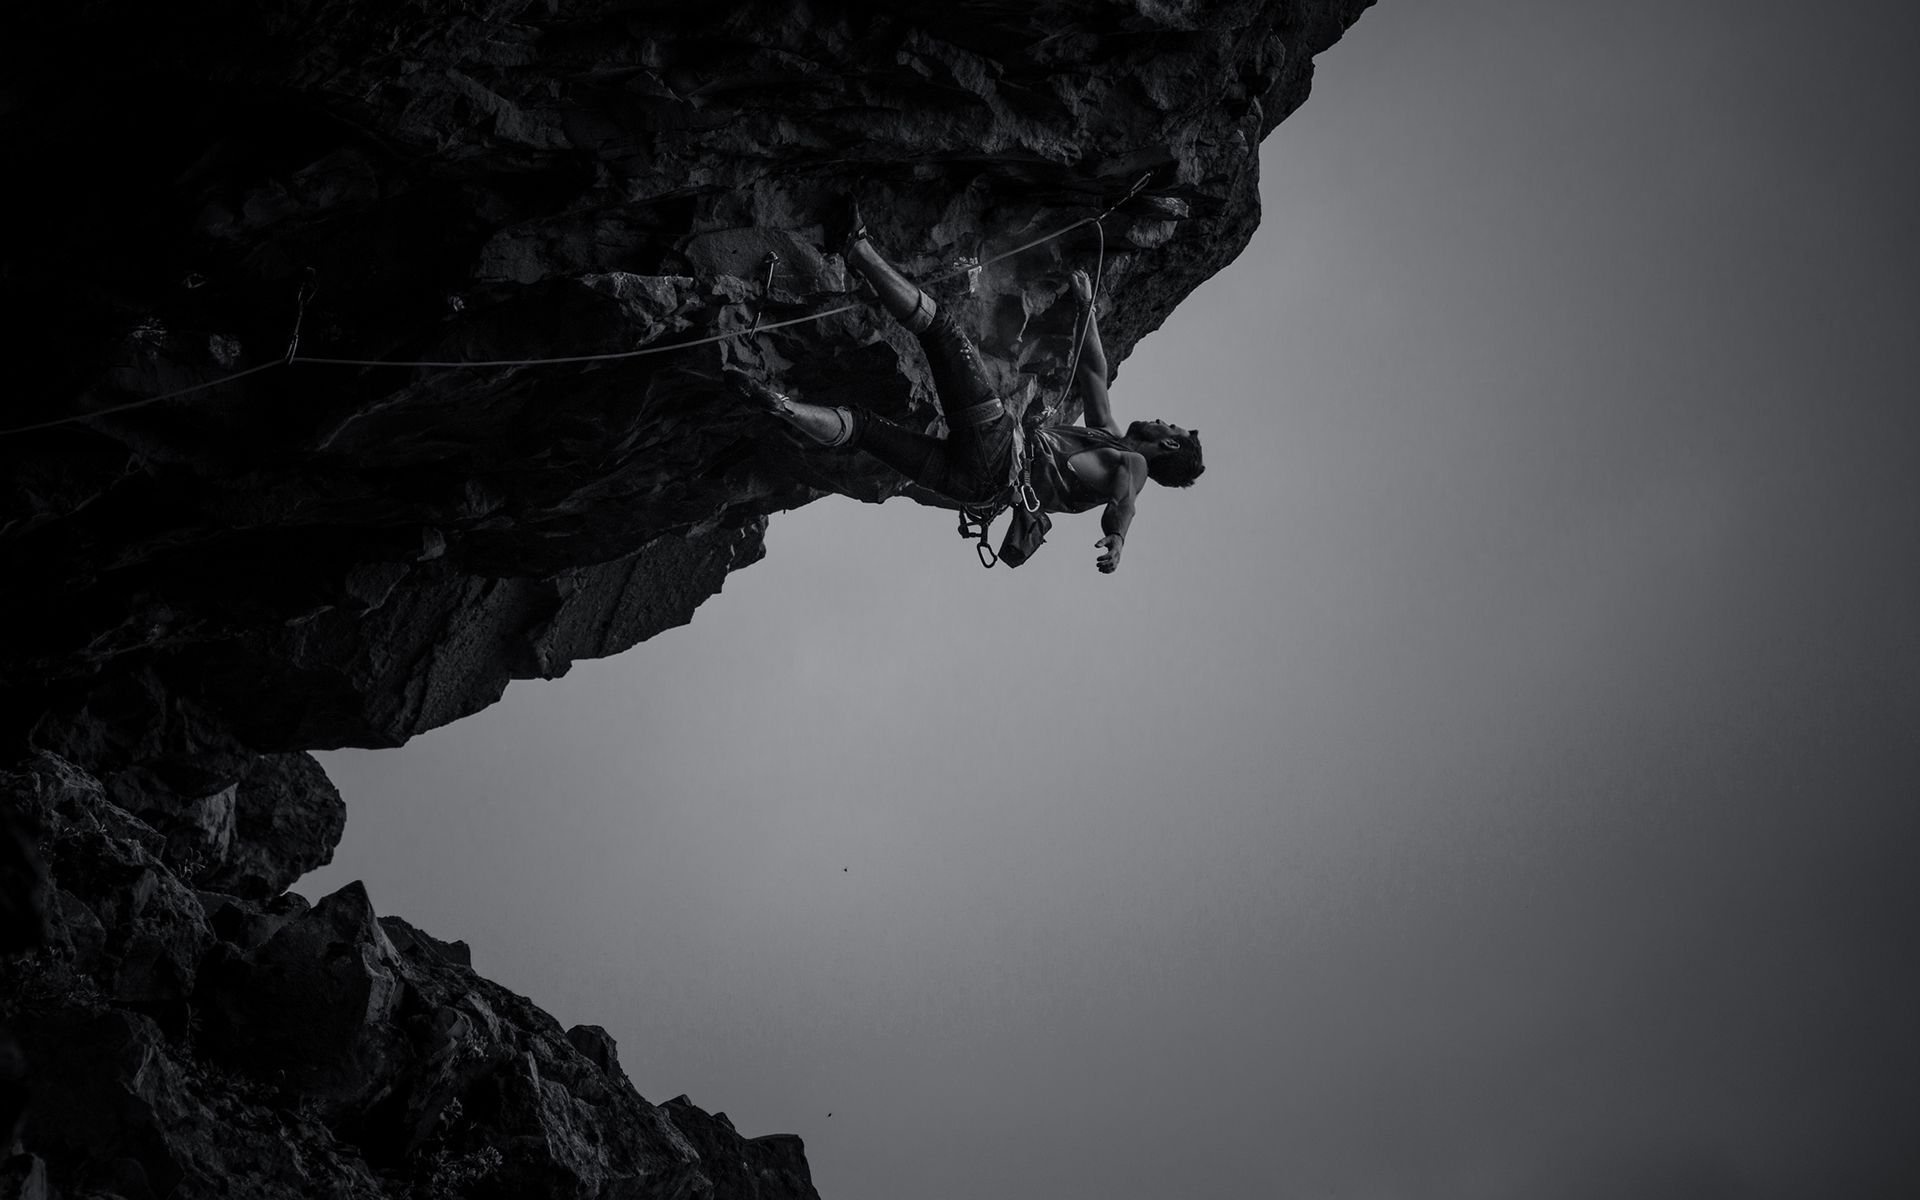 Climbing, Monochrome adventure, Rock climbing wallpapers, Black and white, 1920x1200 HD Desktop